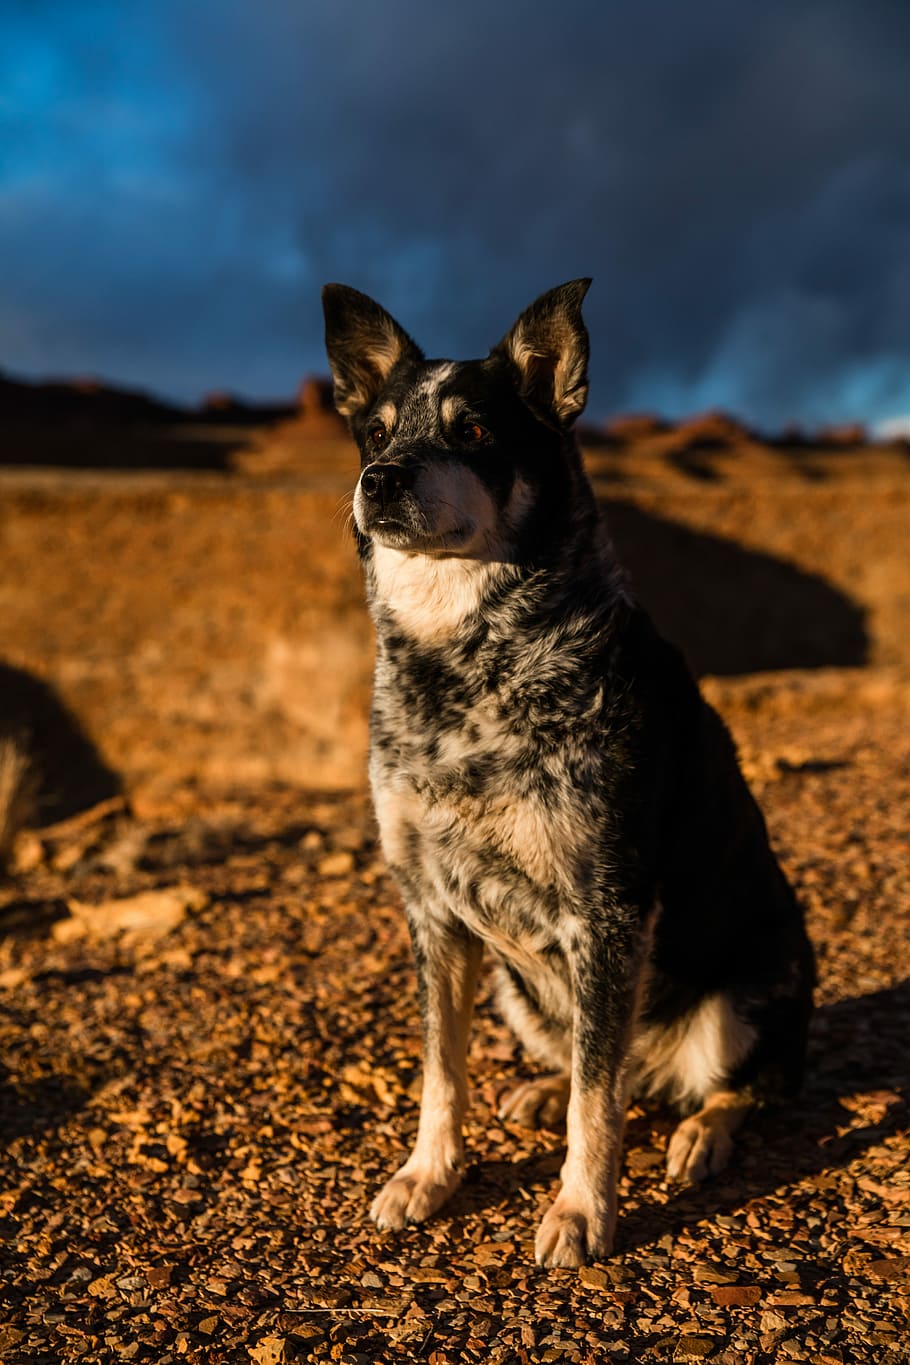 selective focus photography of sitting tan dog, selective focus photography of dog sitting on dirt